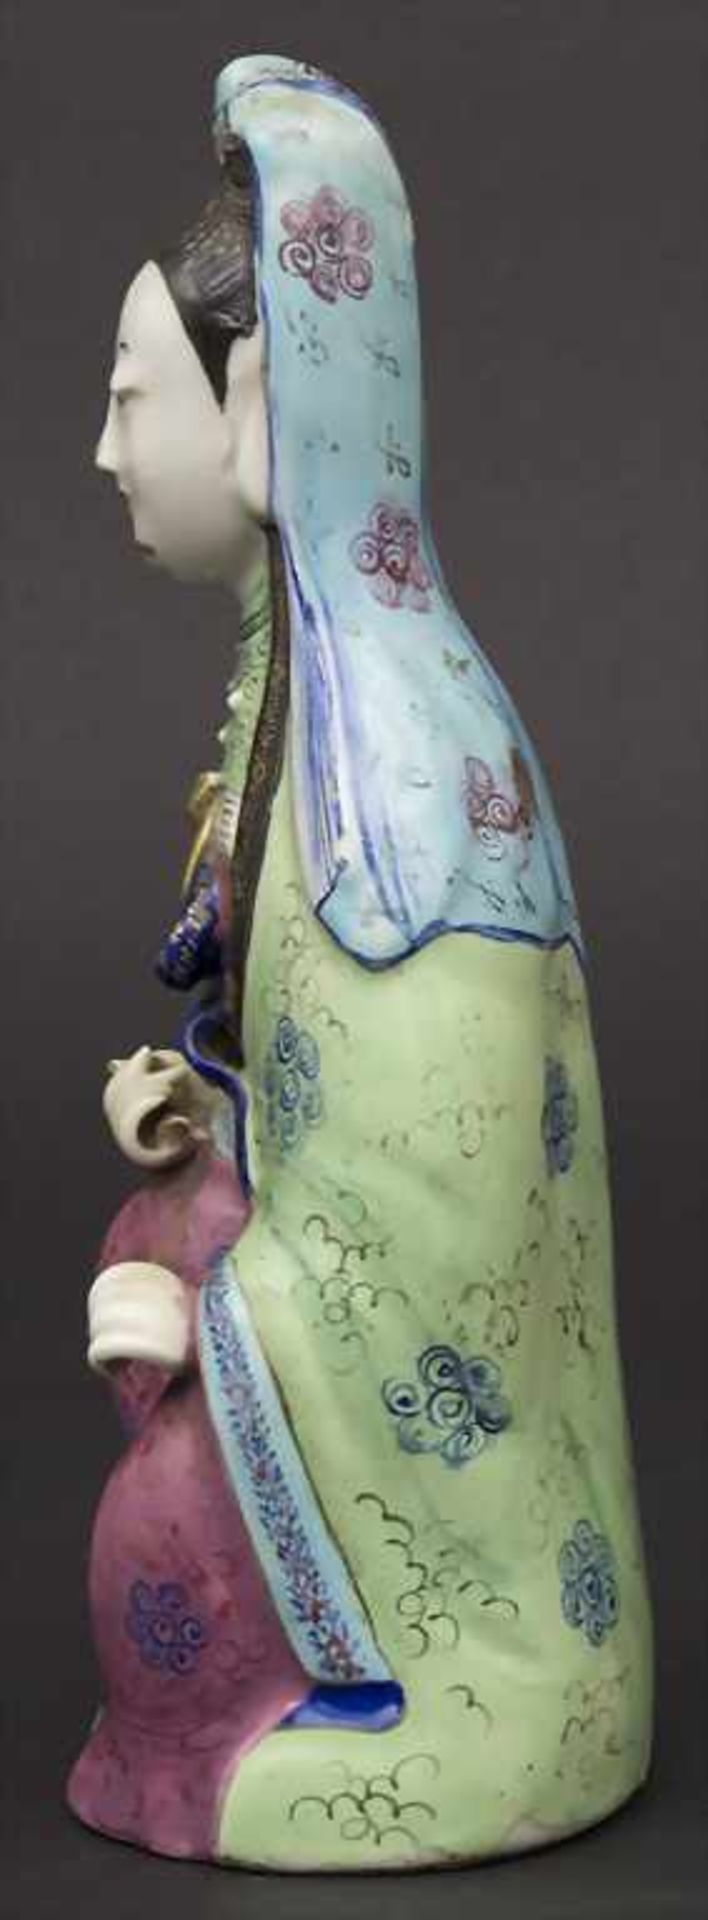 Guanjin bzw. Räuchergefäß, China, Qing-Dyastie, 18.Jh.Material: Porzellan, polychrom bemalt, - Image 4 of 6